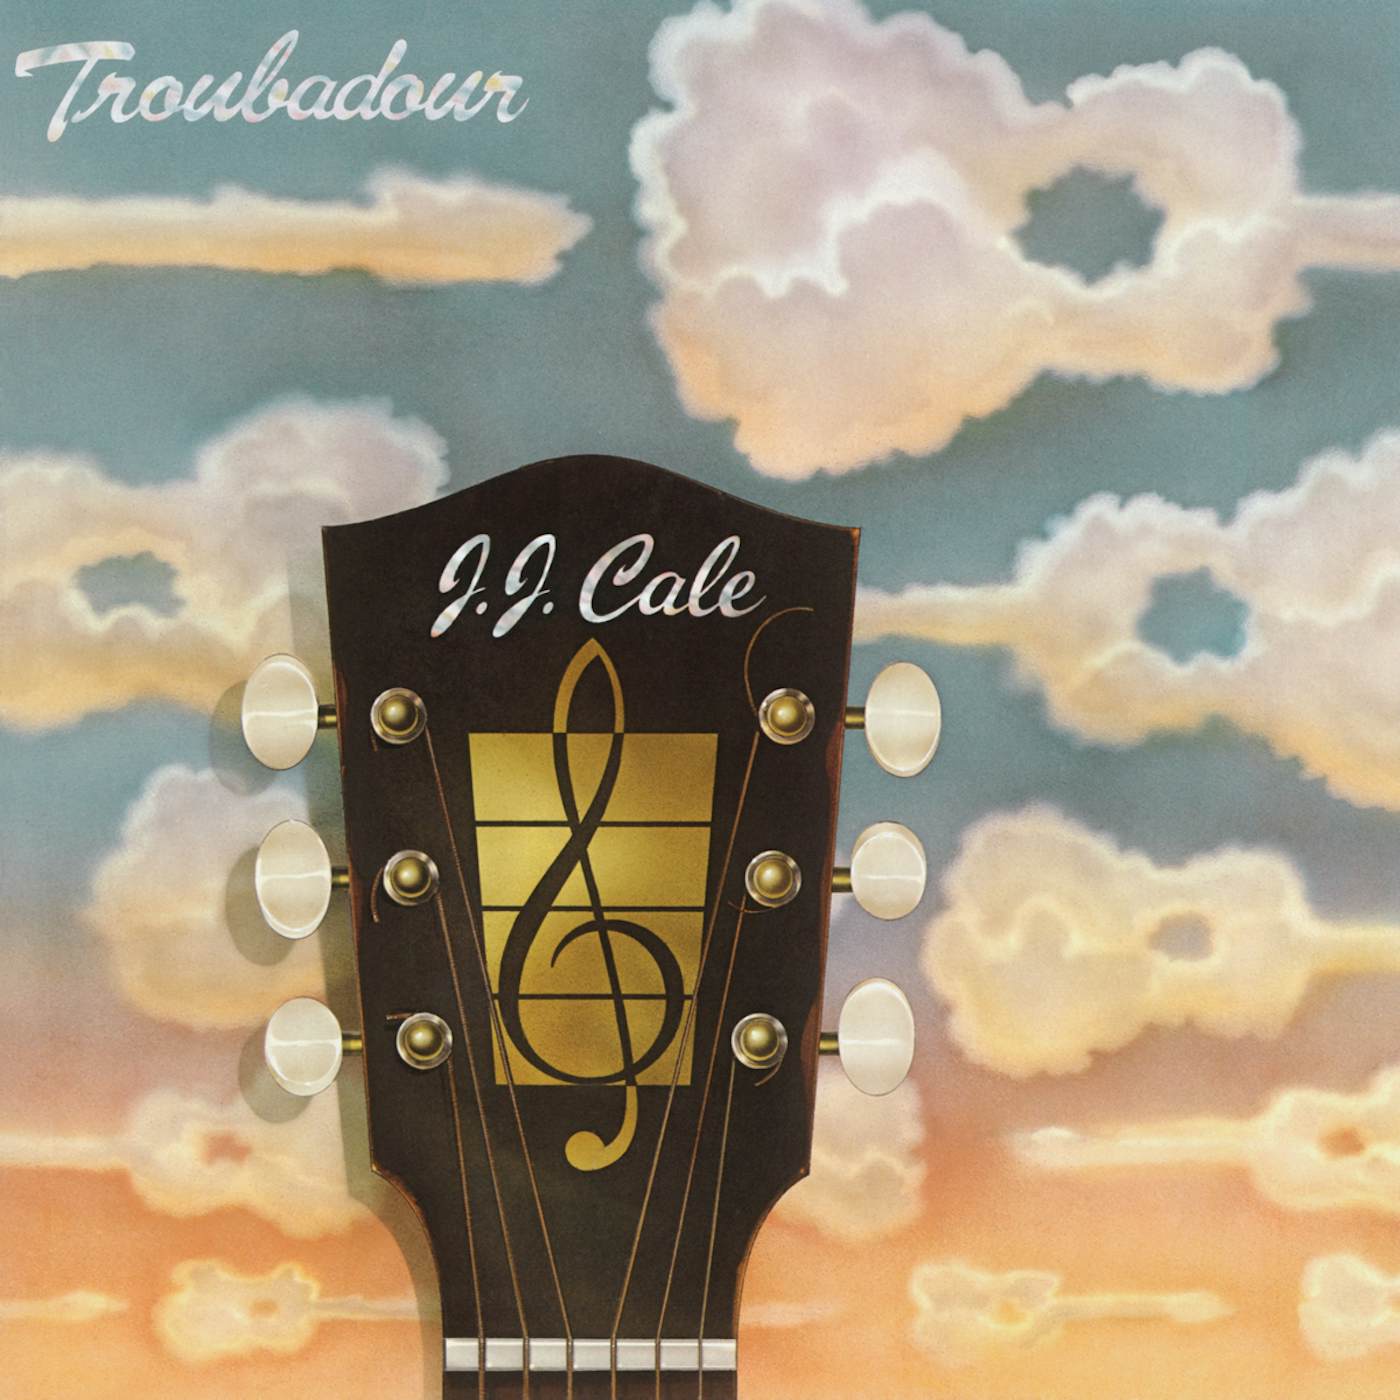 J.J. Cale Troubadour Vinyl Record